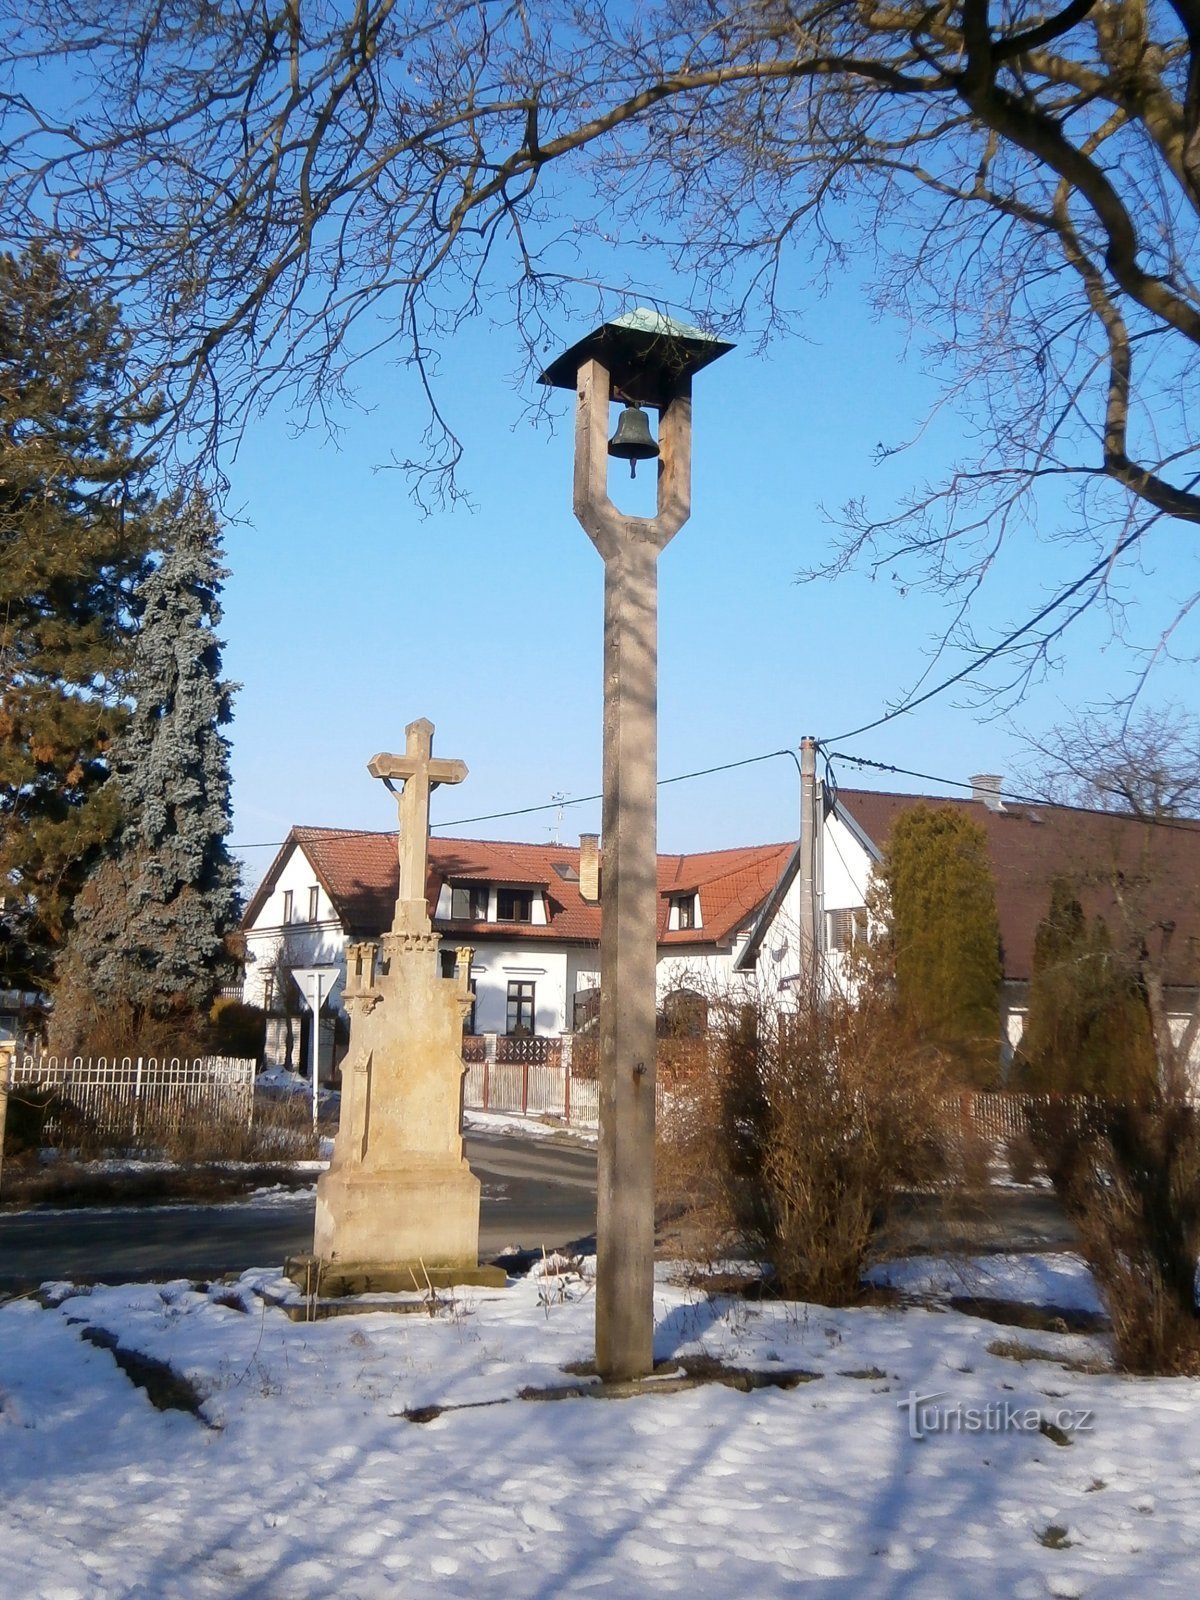 Zvonik i križ u Roudničkoj (Hradec Králové, 14.2.2017. travnja XNUMX.)